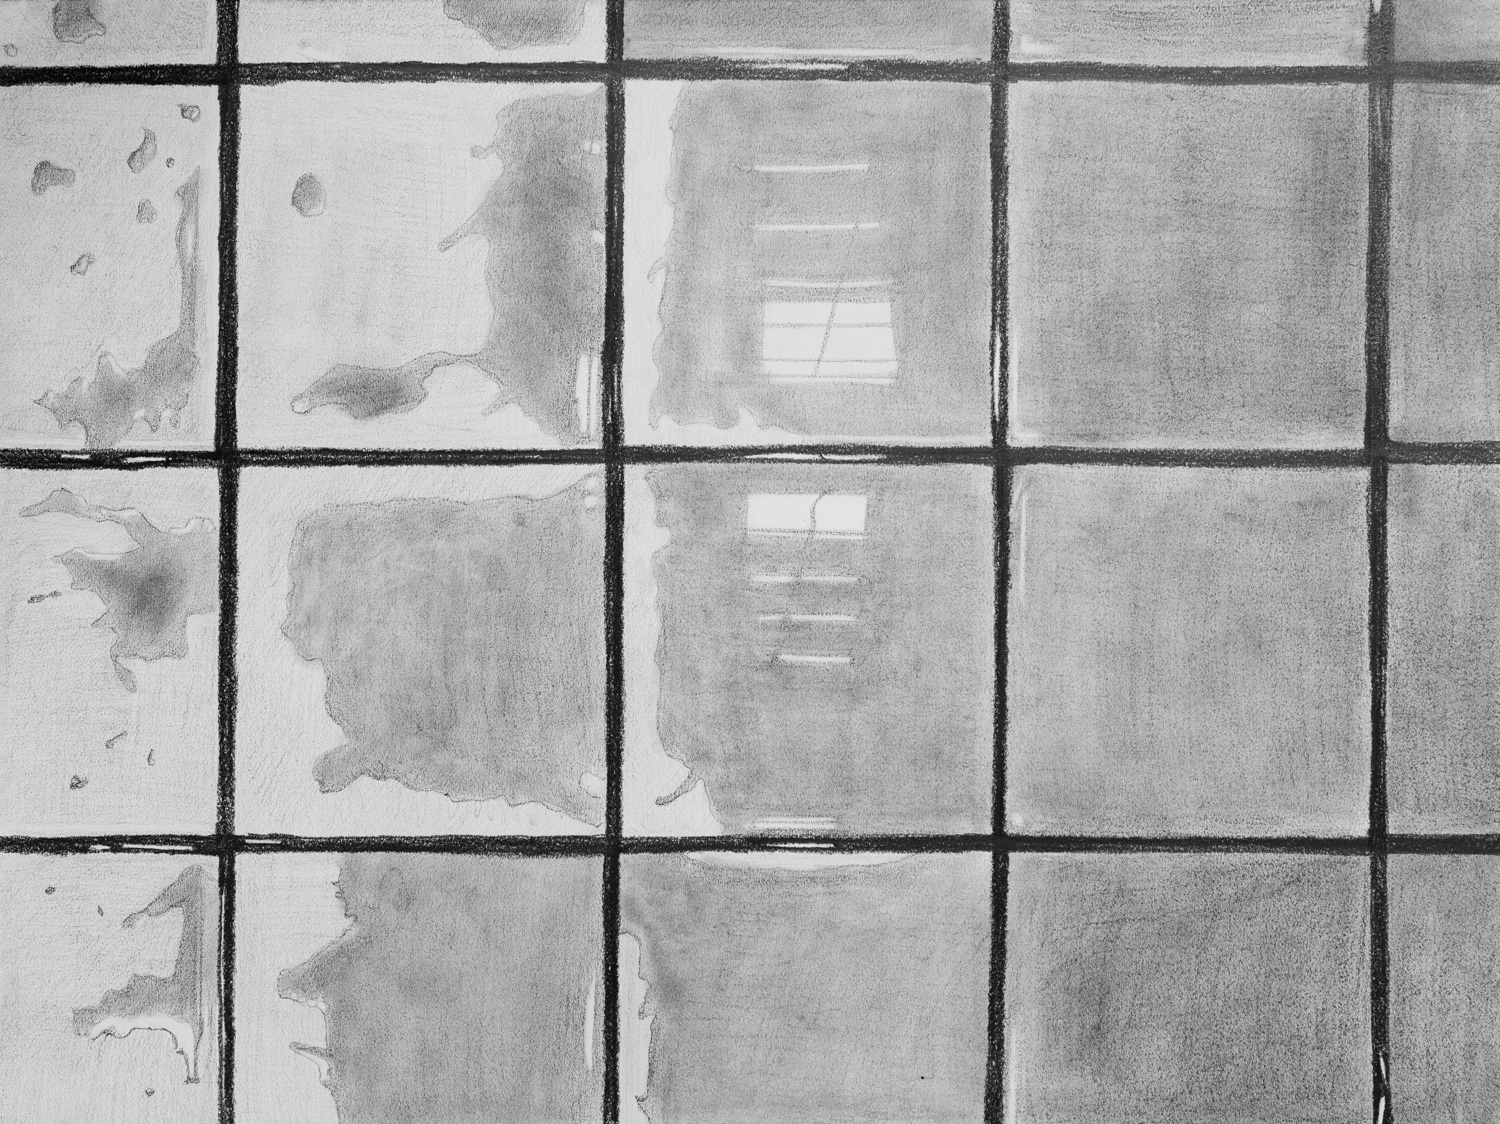 Charcoal drawing of a wet bathroom tile floor.